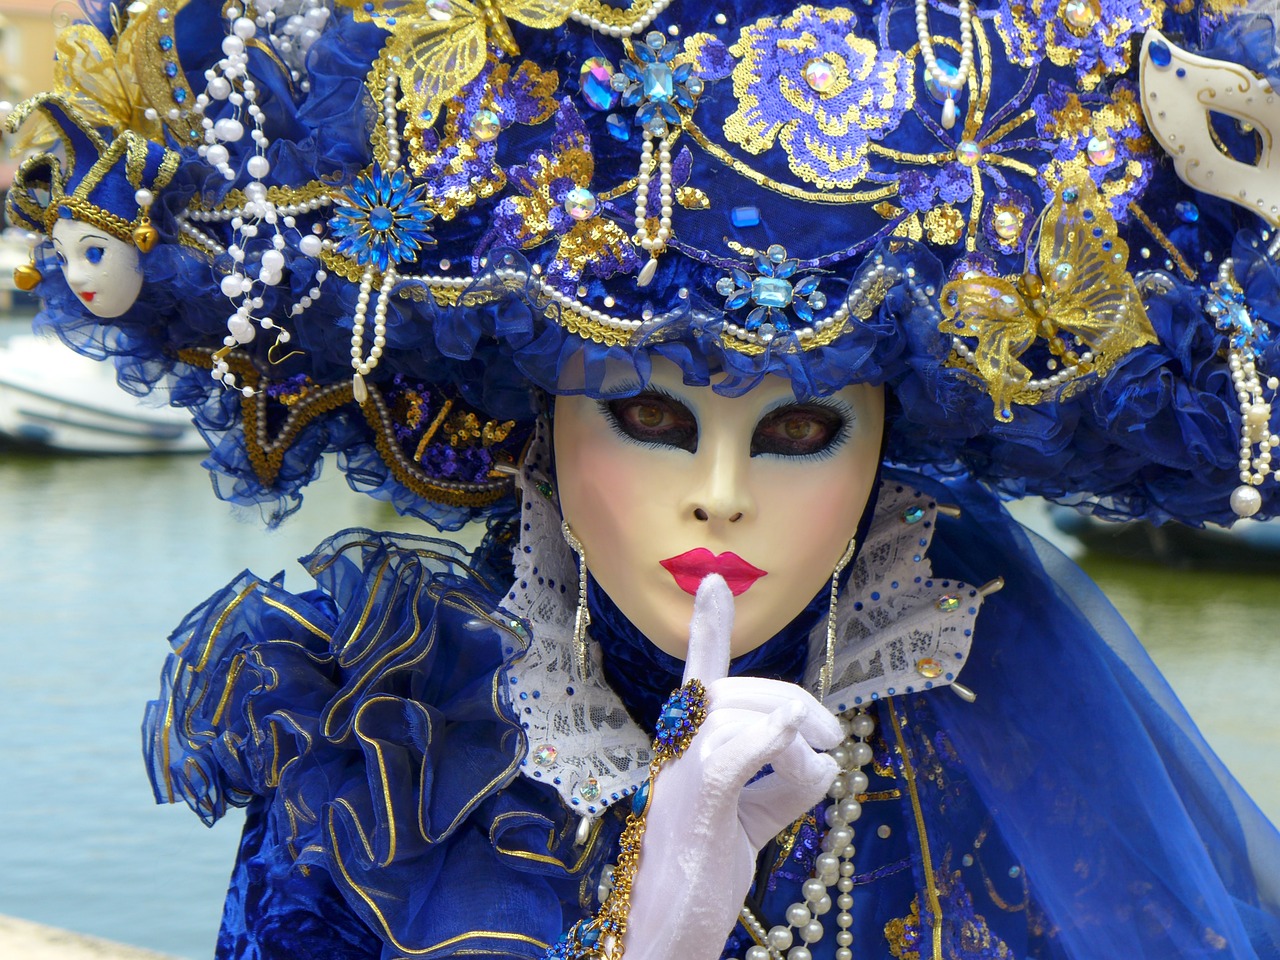 Maschere del carnevale di Venezia: 42mila pezzi sequestrati - Televenezia